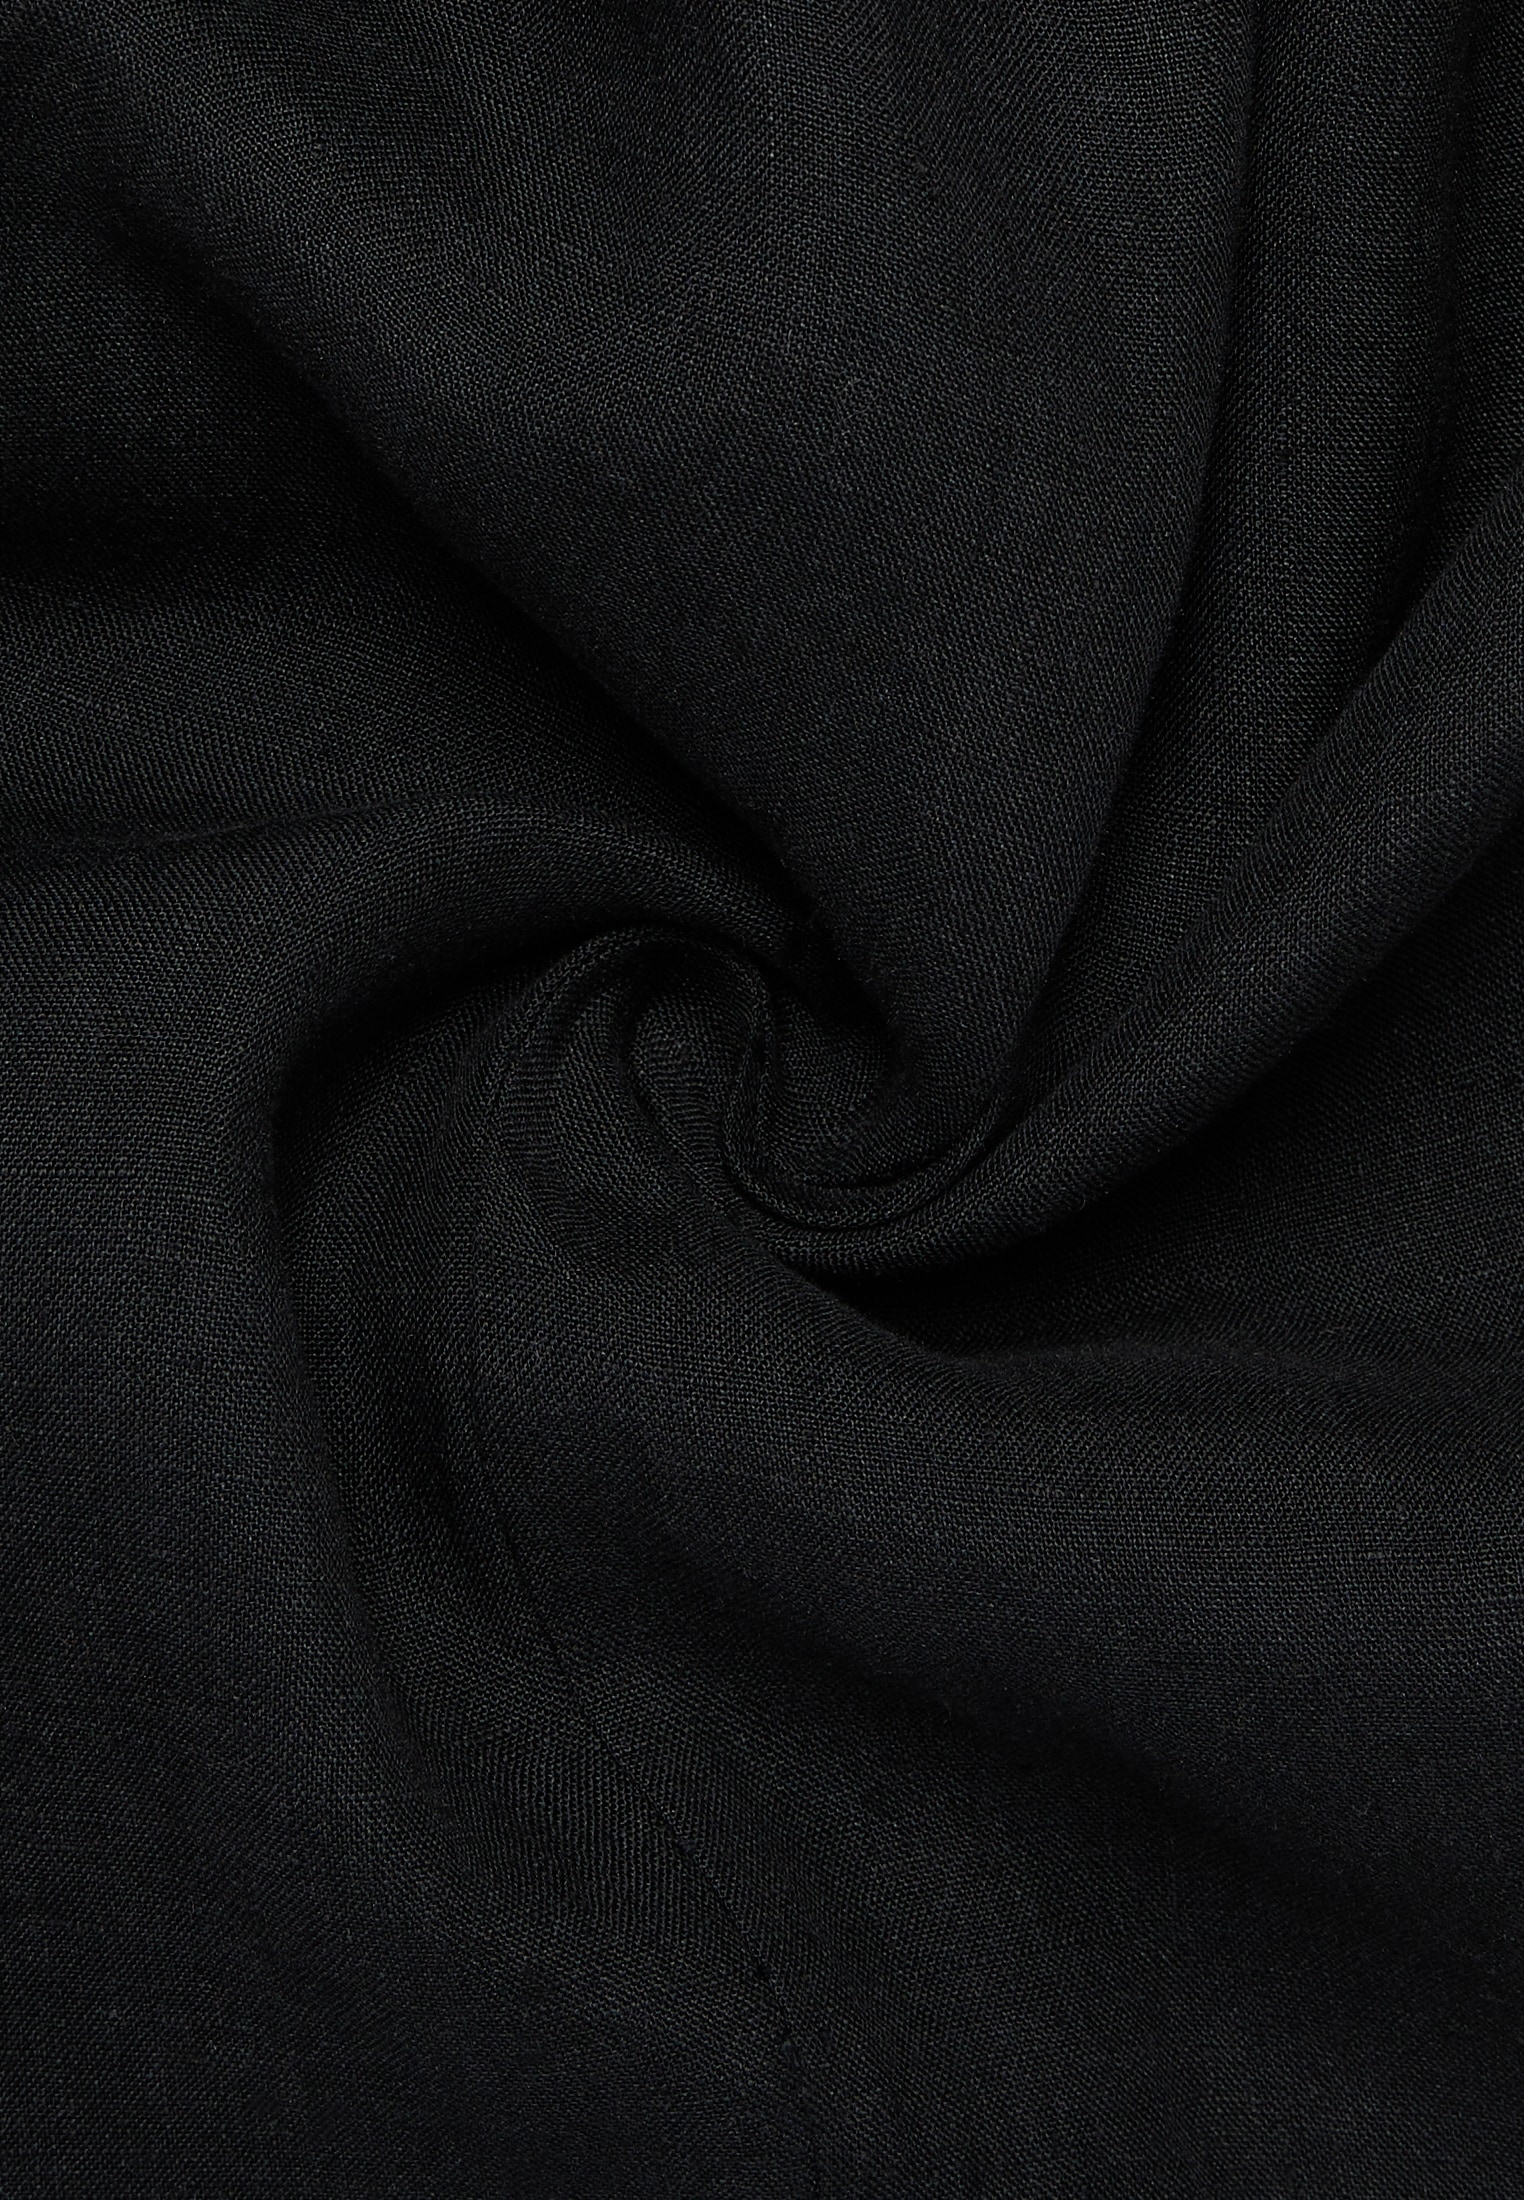 Hose in schwarz unifarben